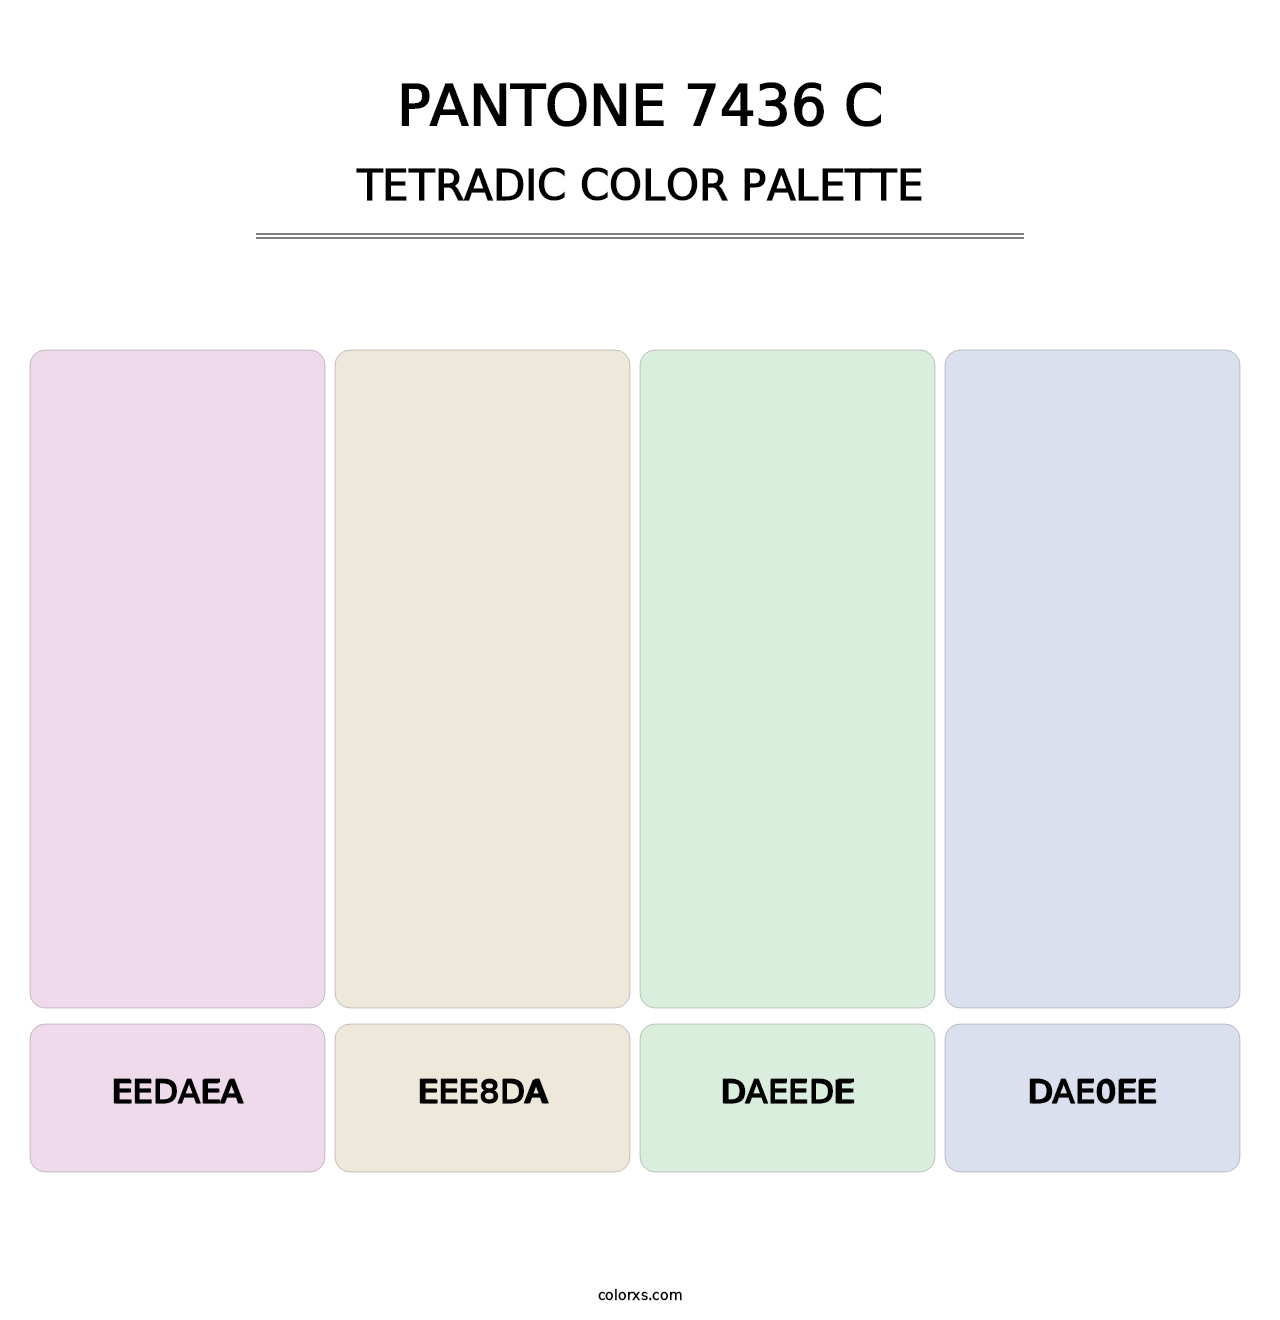 PANTONE 7436 C - Tetradic Color Palette